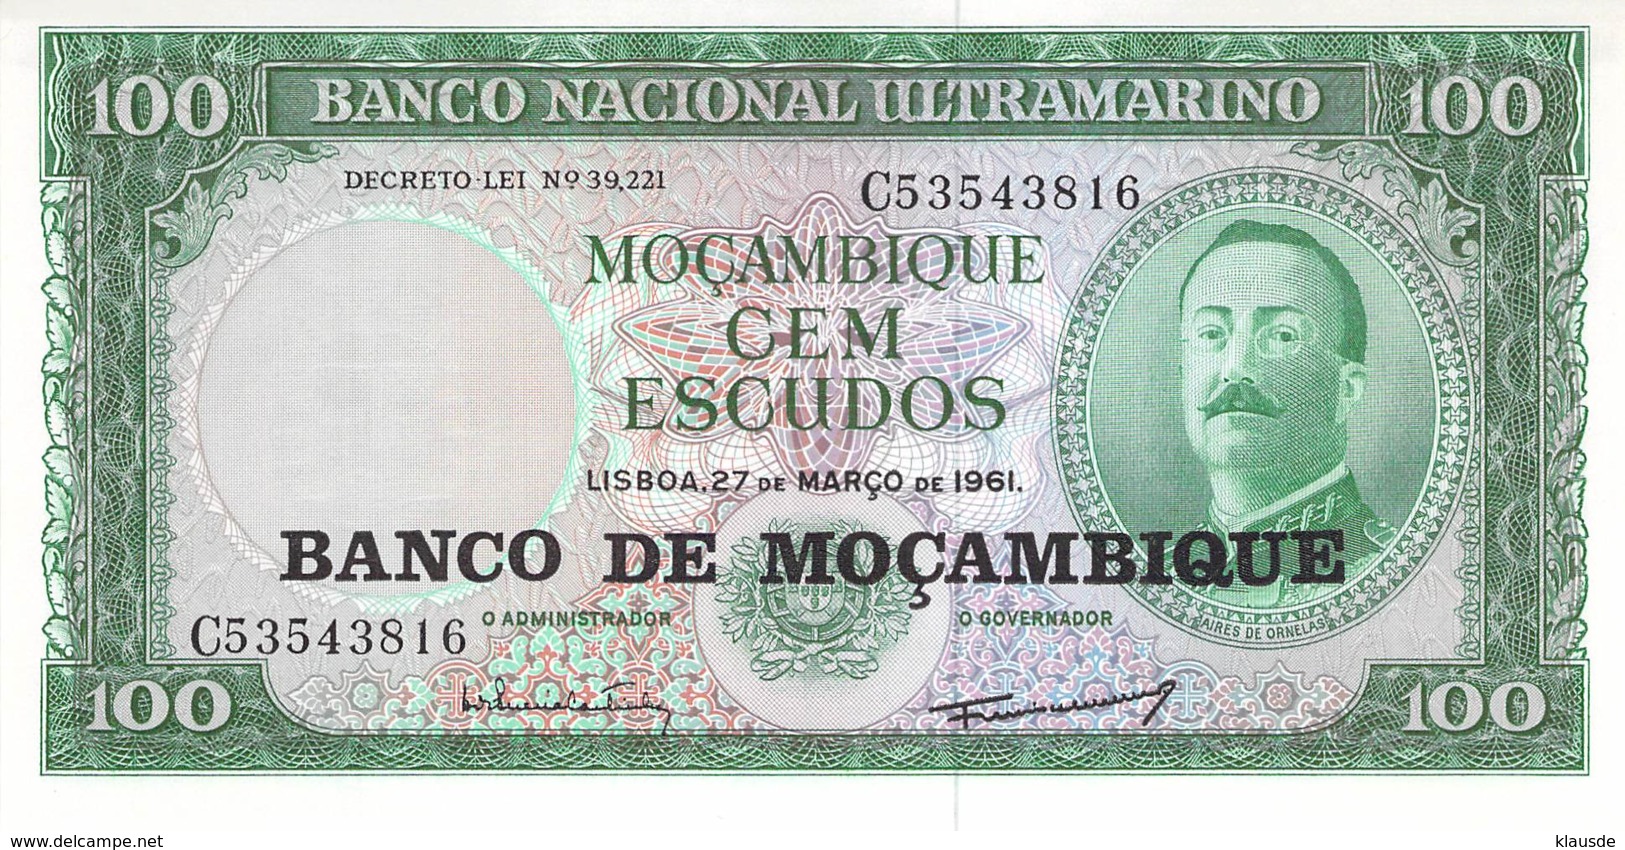 Cem Escudos Banknote Mocambique - Mozambique